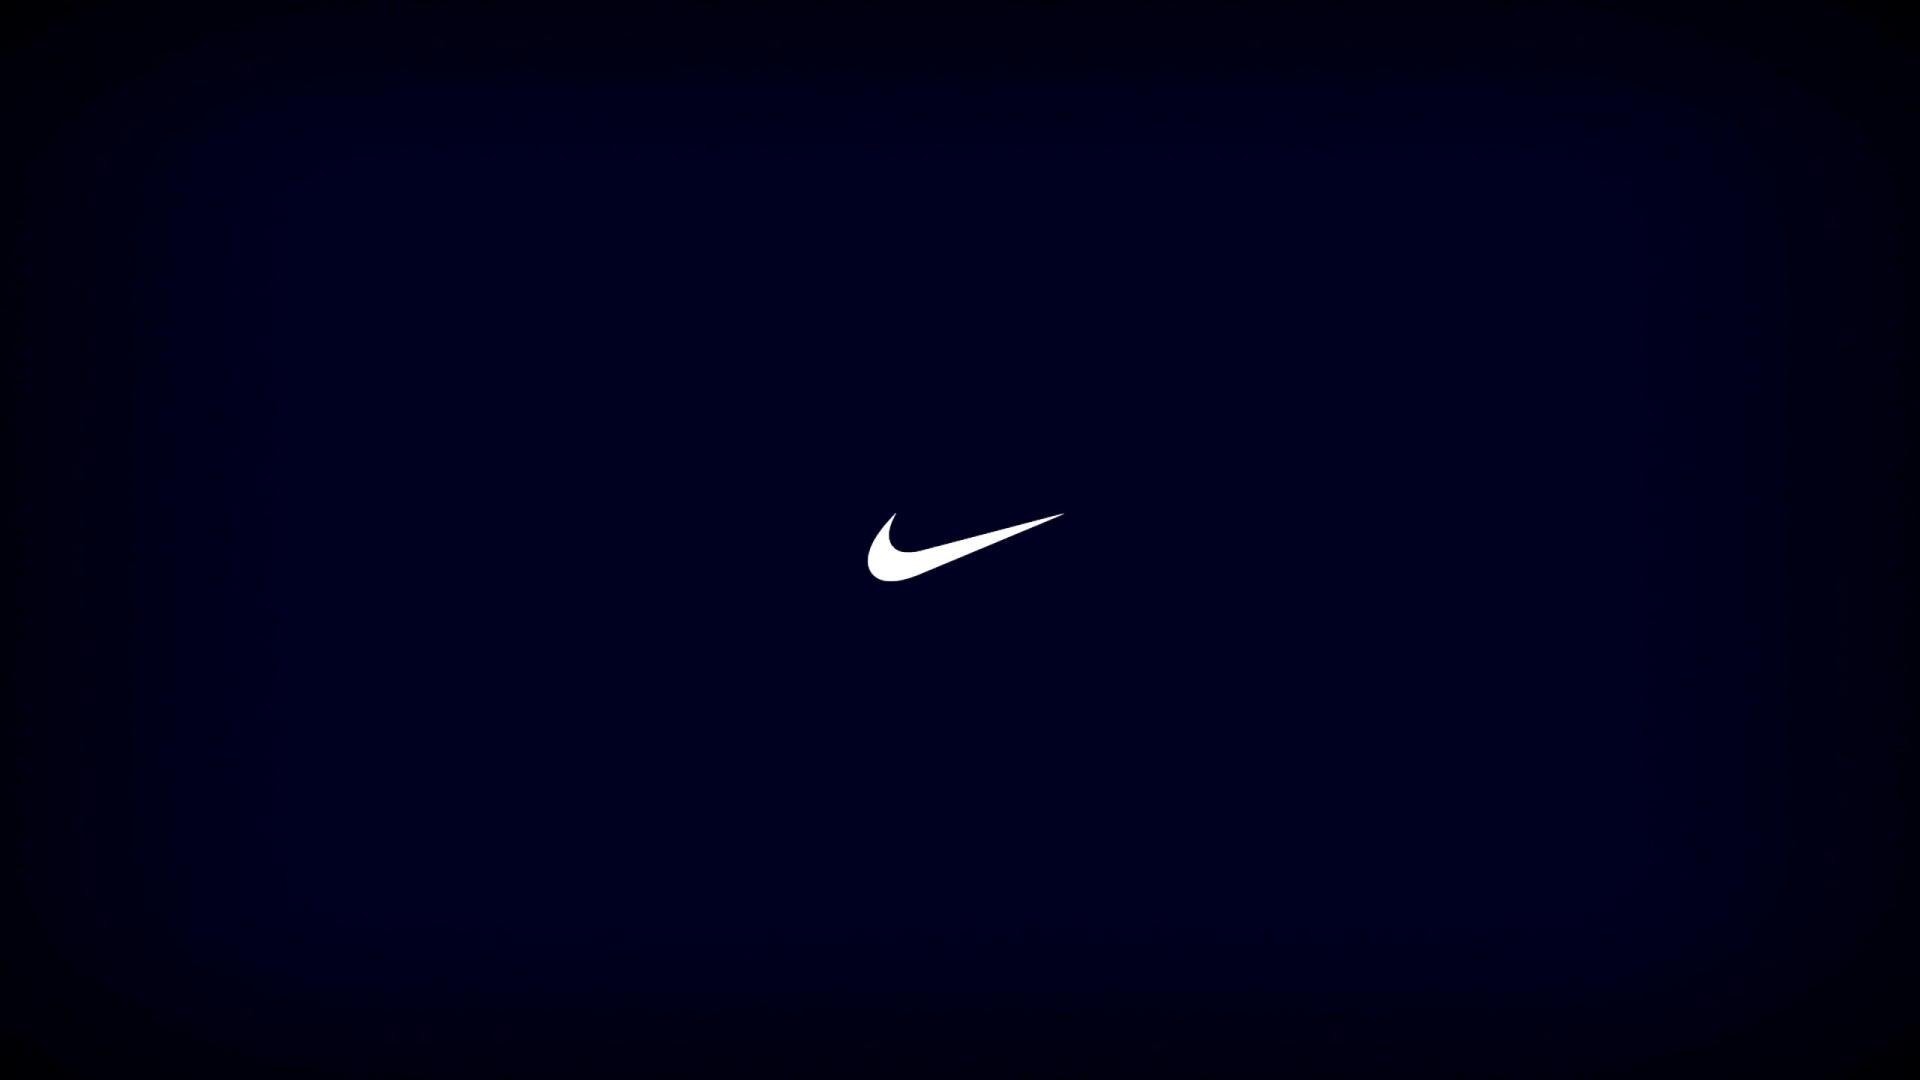 Nike Logo On The Blue Background Wallpaper Desktop